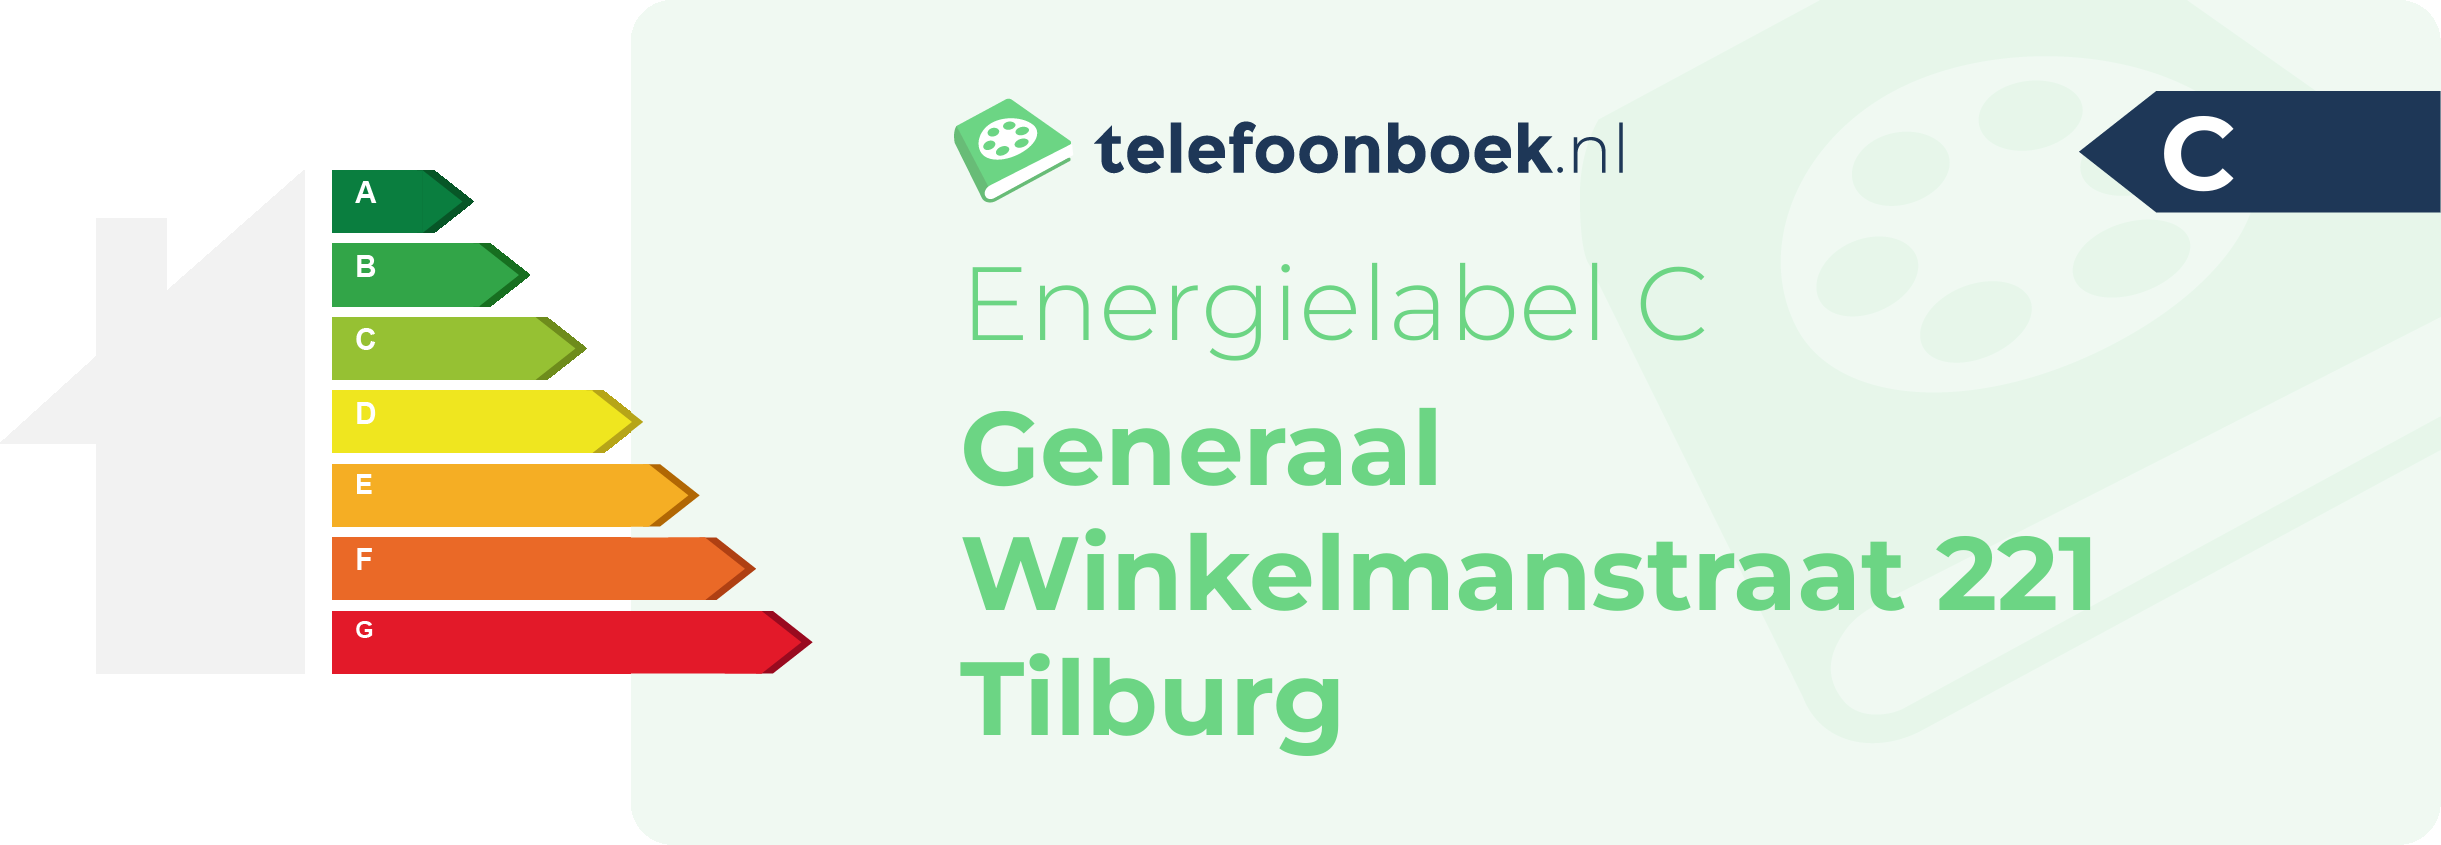 Energielabel Generaal Winkelmanstraat 221 Tilburg